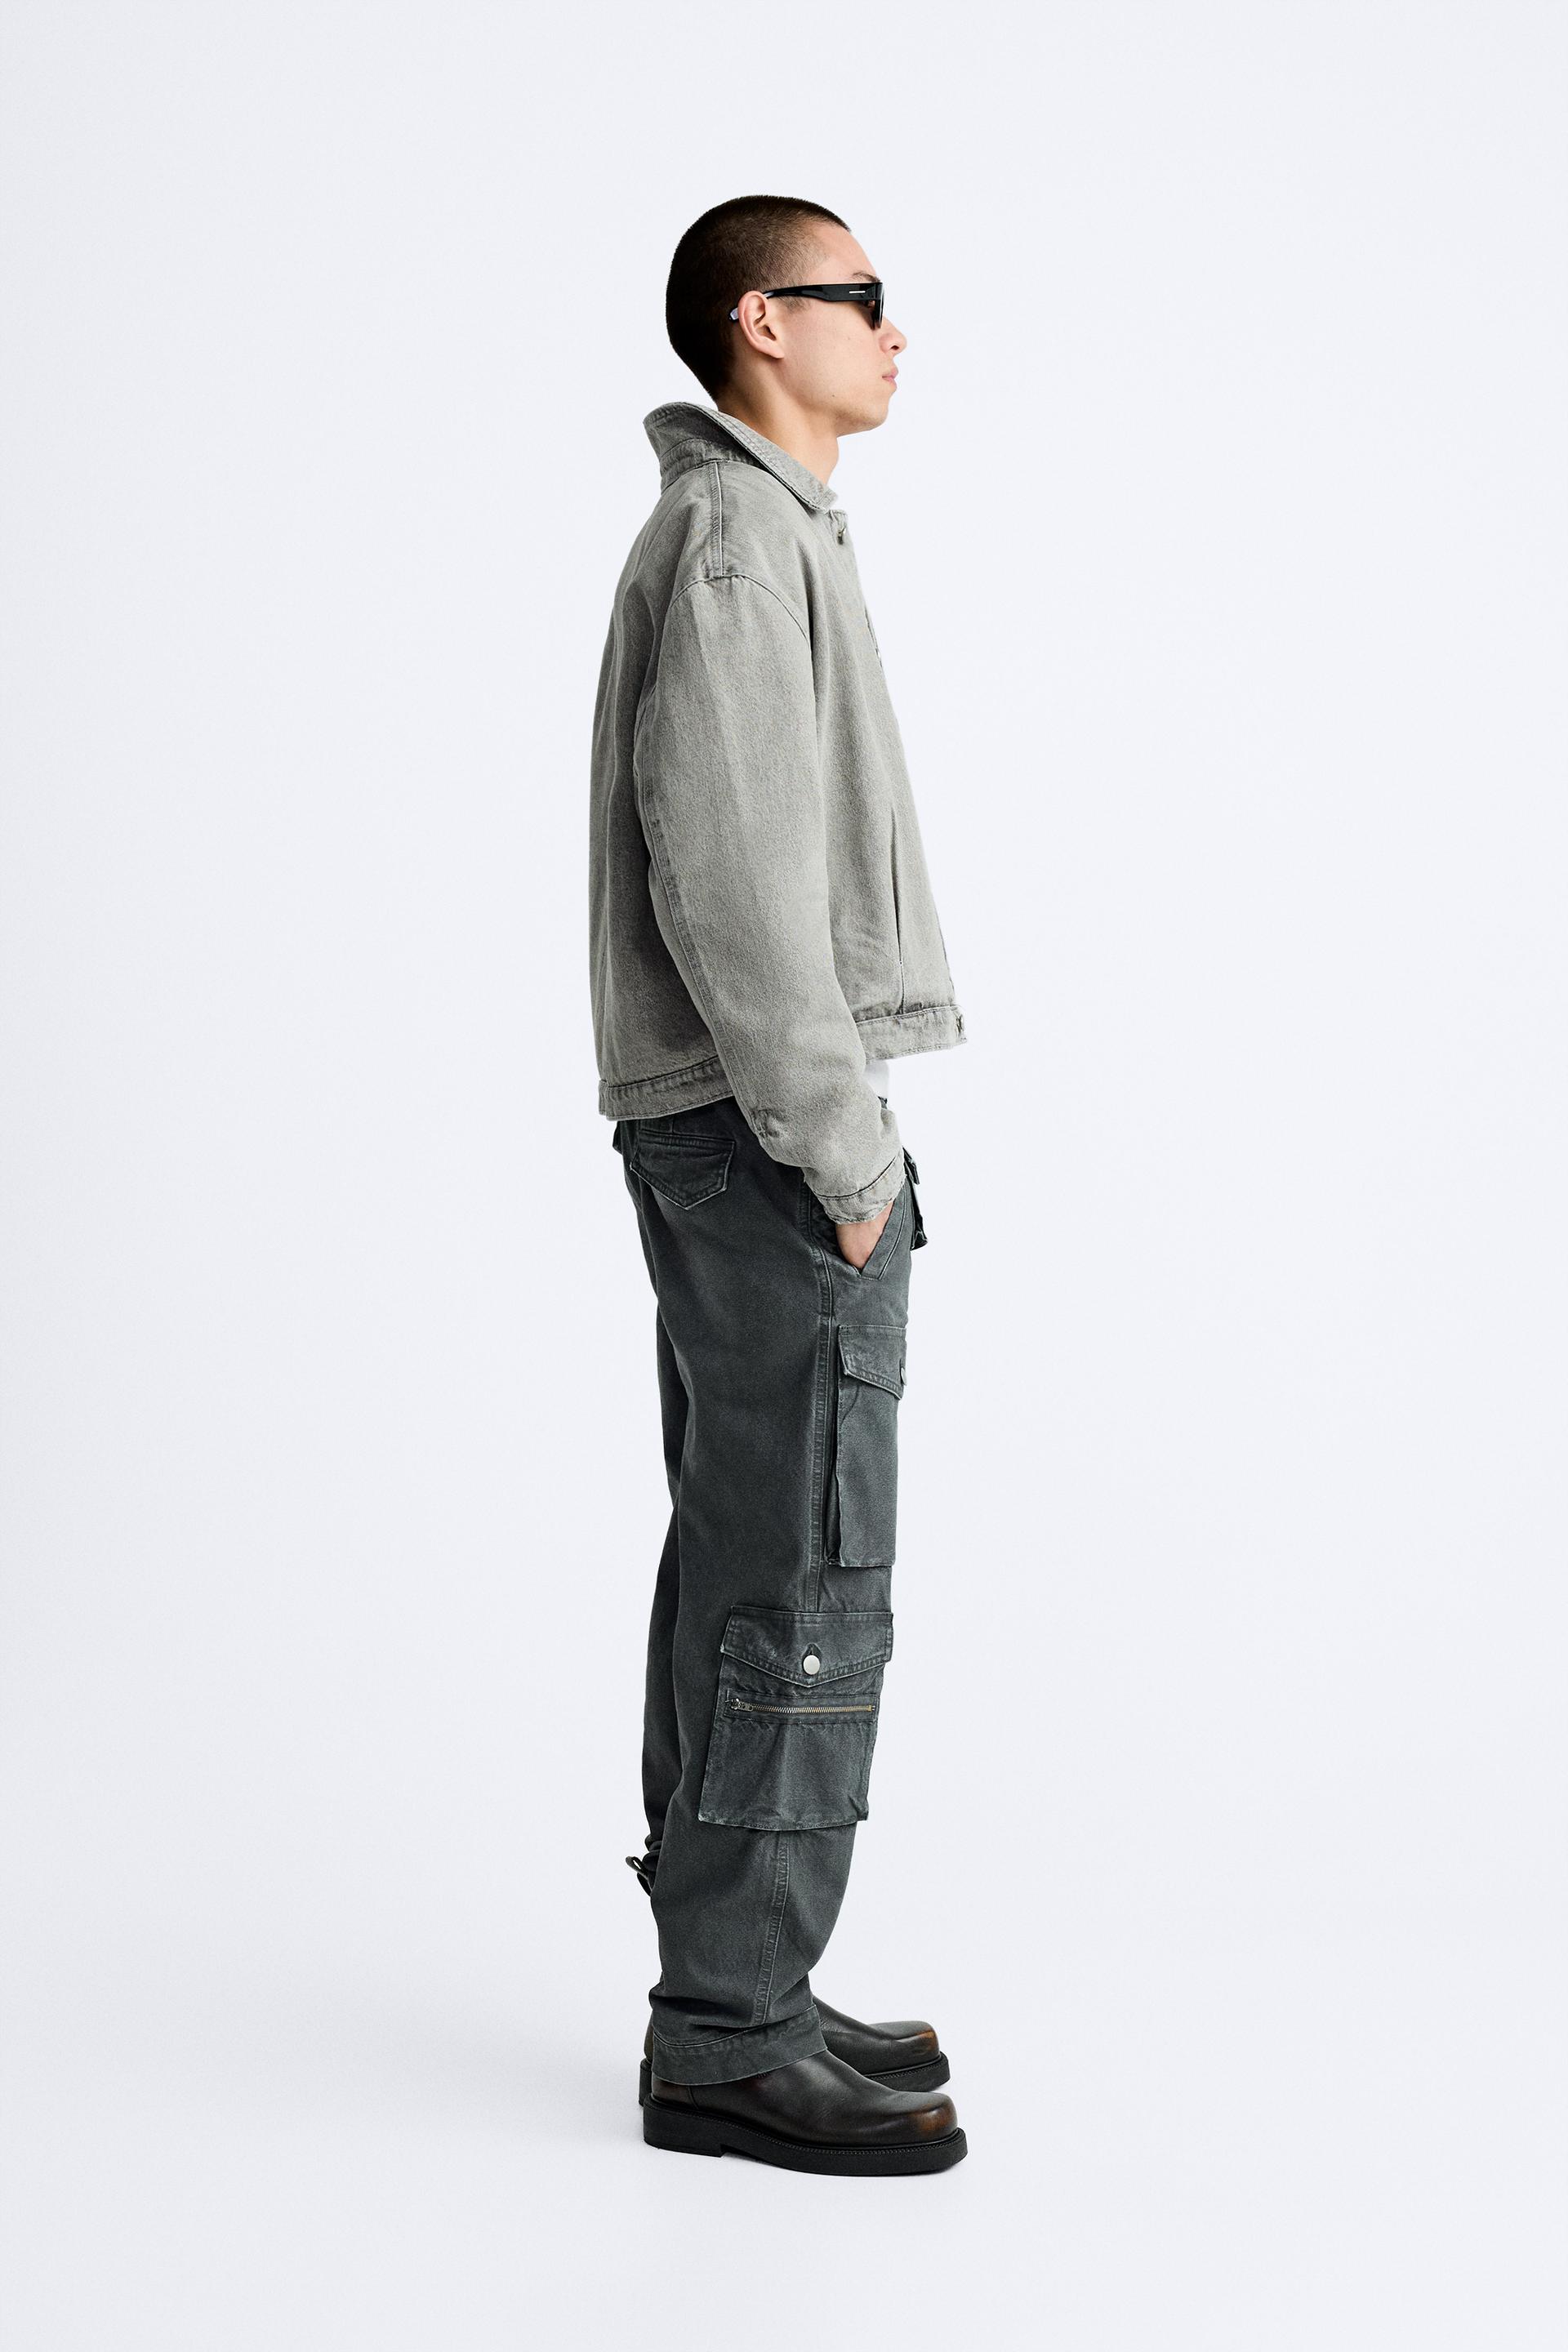 ZARA NEW MAN Cargo Trousers Utility Jeans Pockets Pant Grey 5575